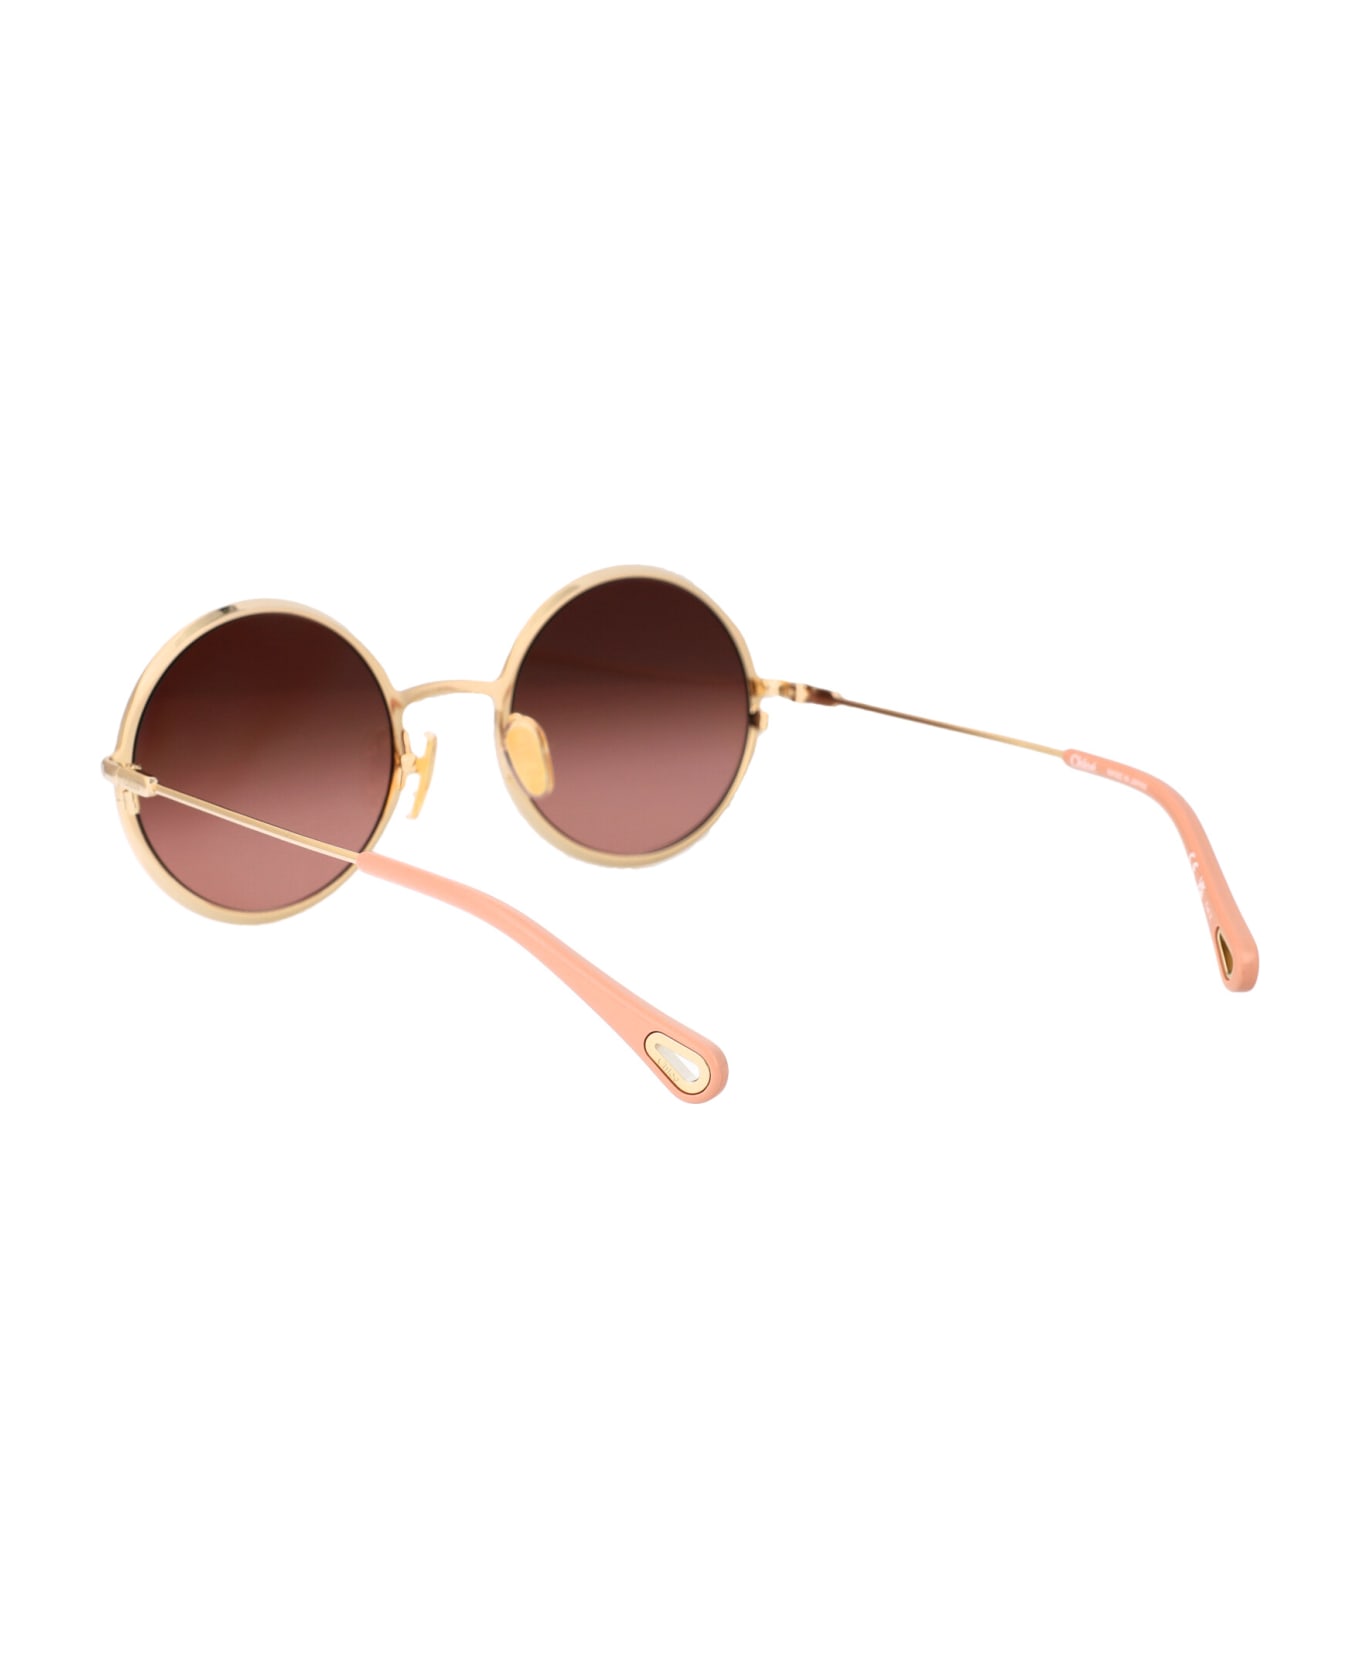 Chloé Eyewear Ch0230s Sunglasses - 002 GOLD GOLD COPPER